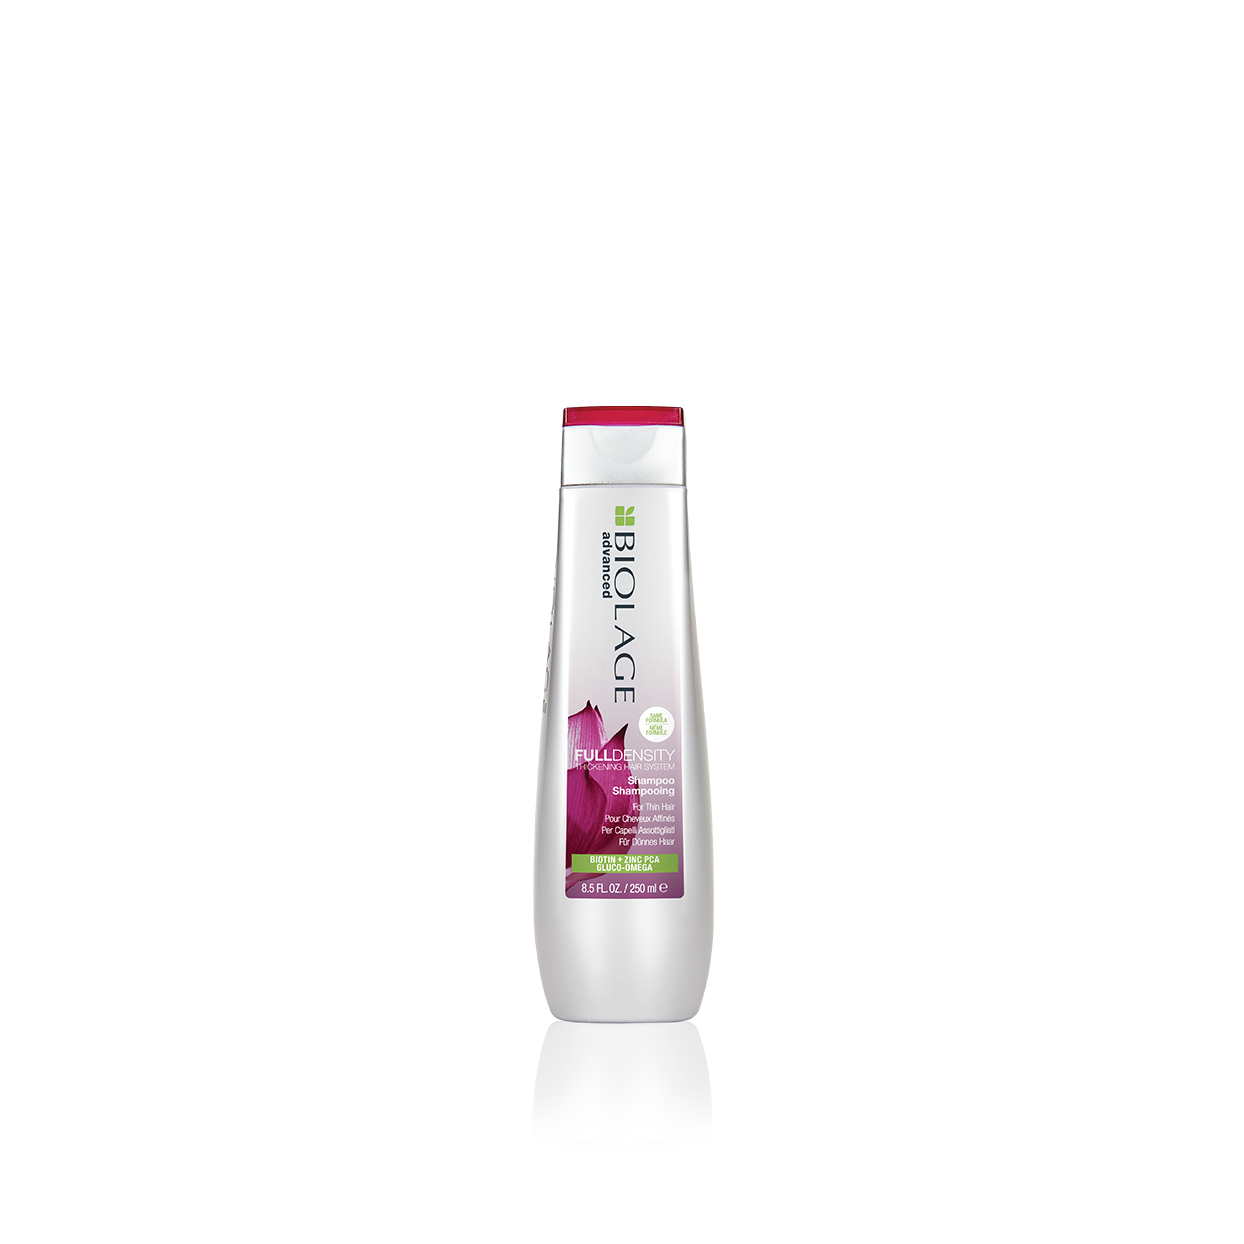 Biolage Advanced FullDensity Thin Hair Shampoo Thickening Shampoo for Thin Hair